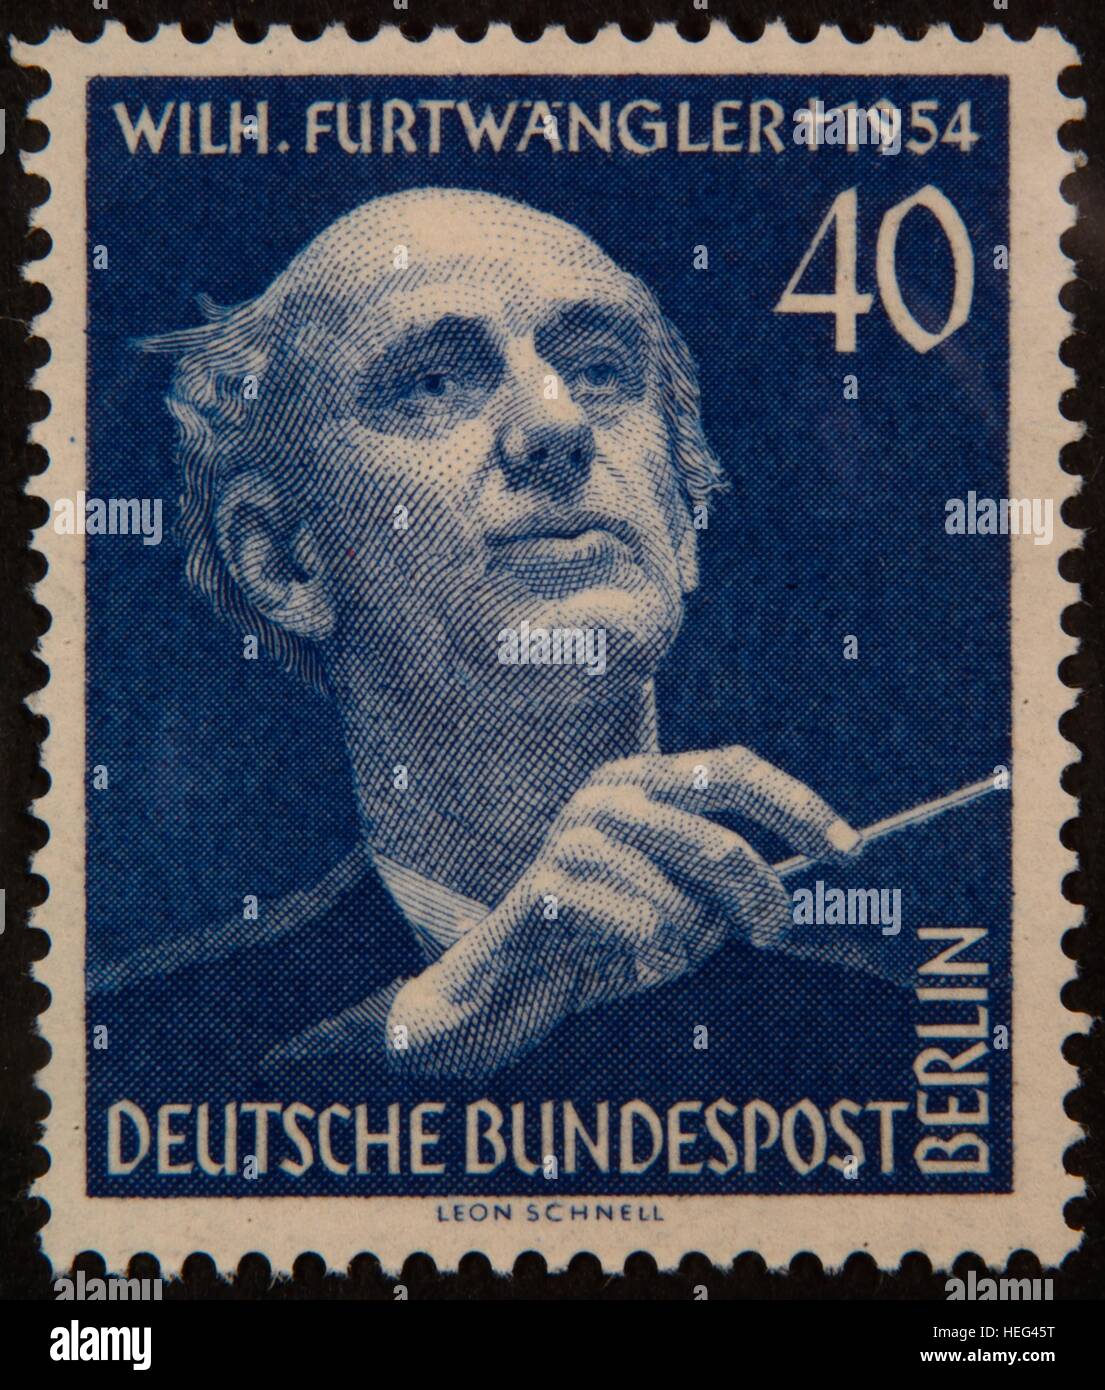 Wilhelm Furtwängler, German conductor and composer, portrait on 1955 German stamp Stock Photo